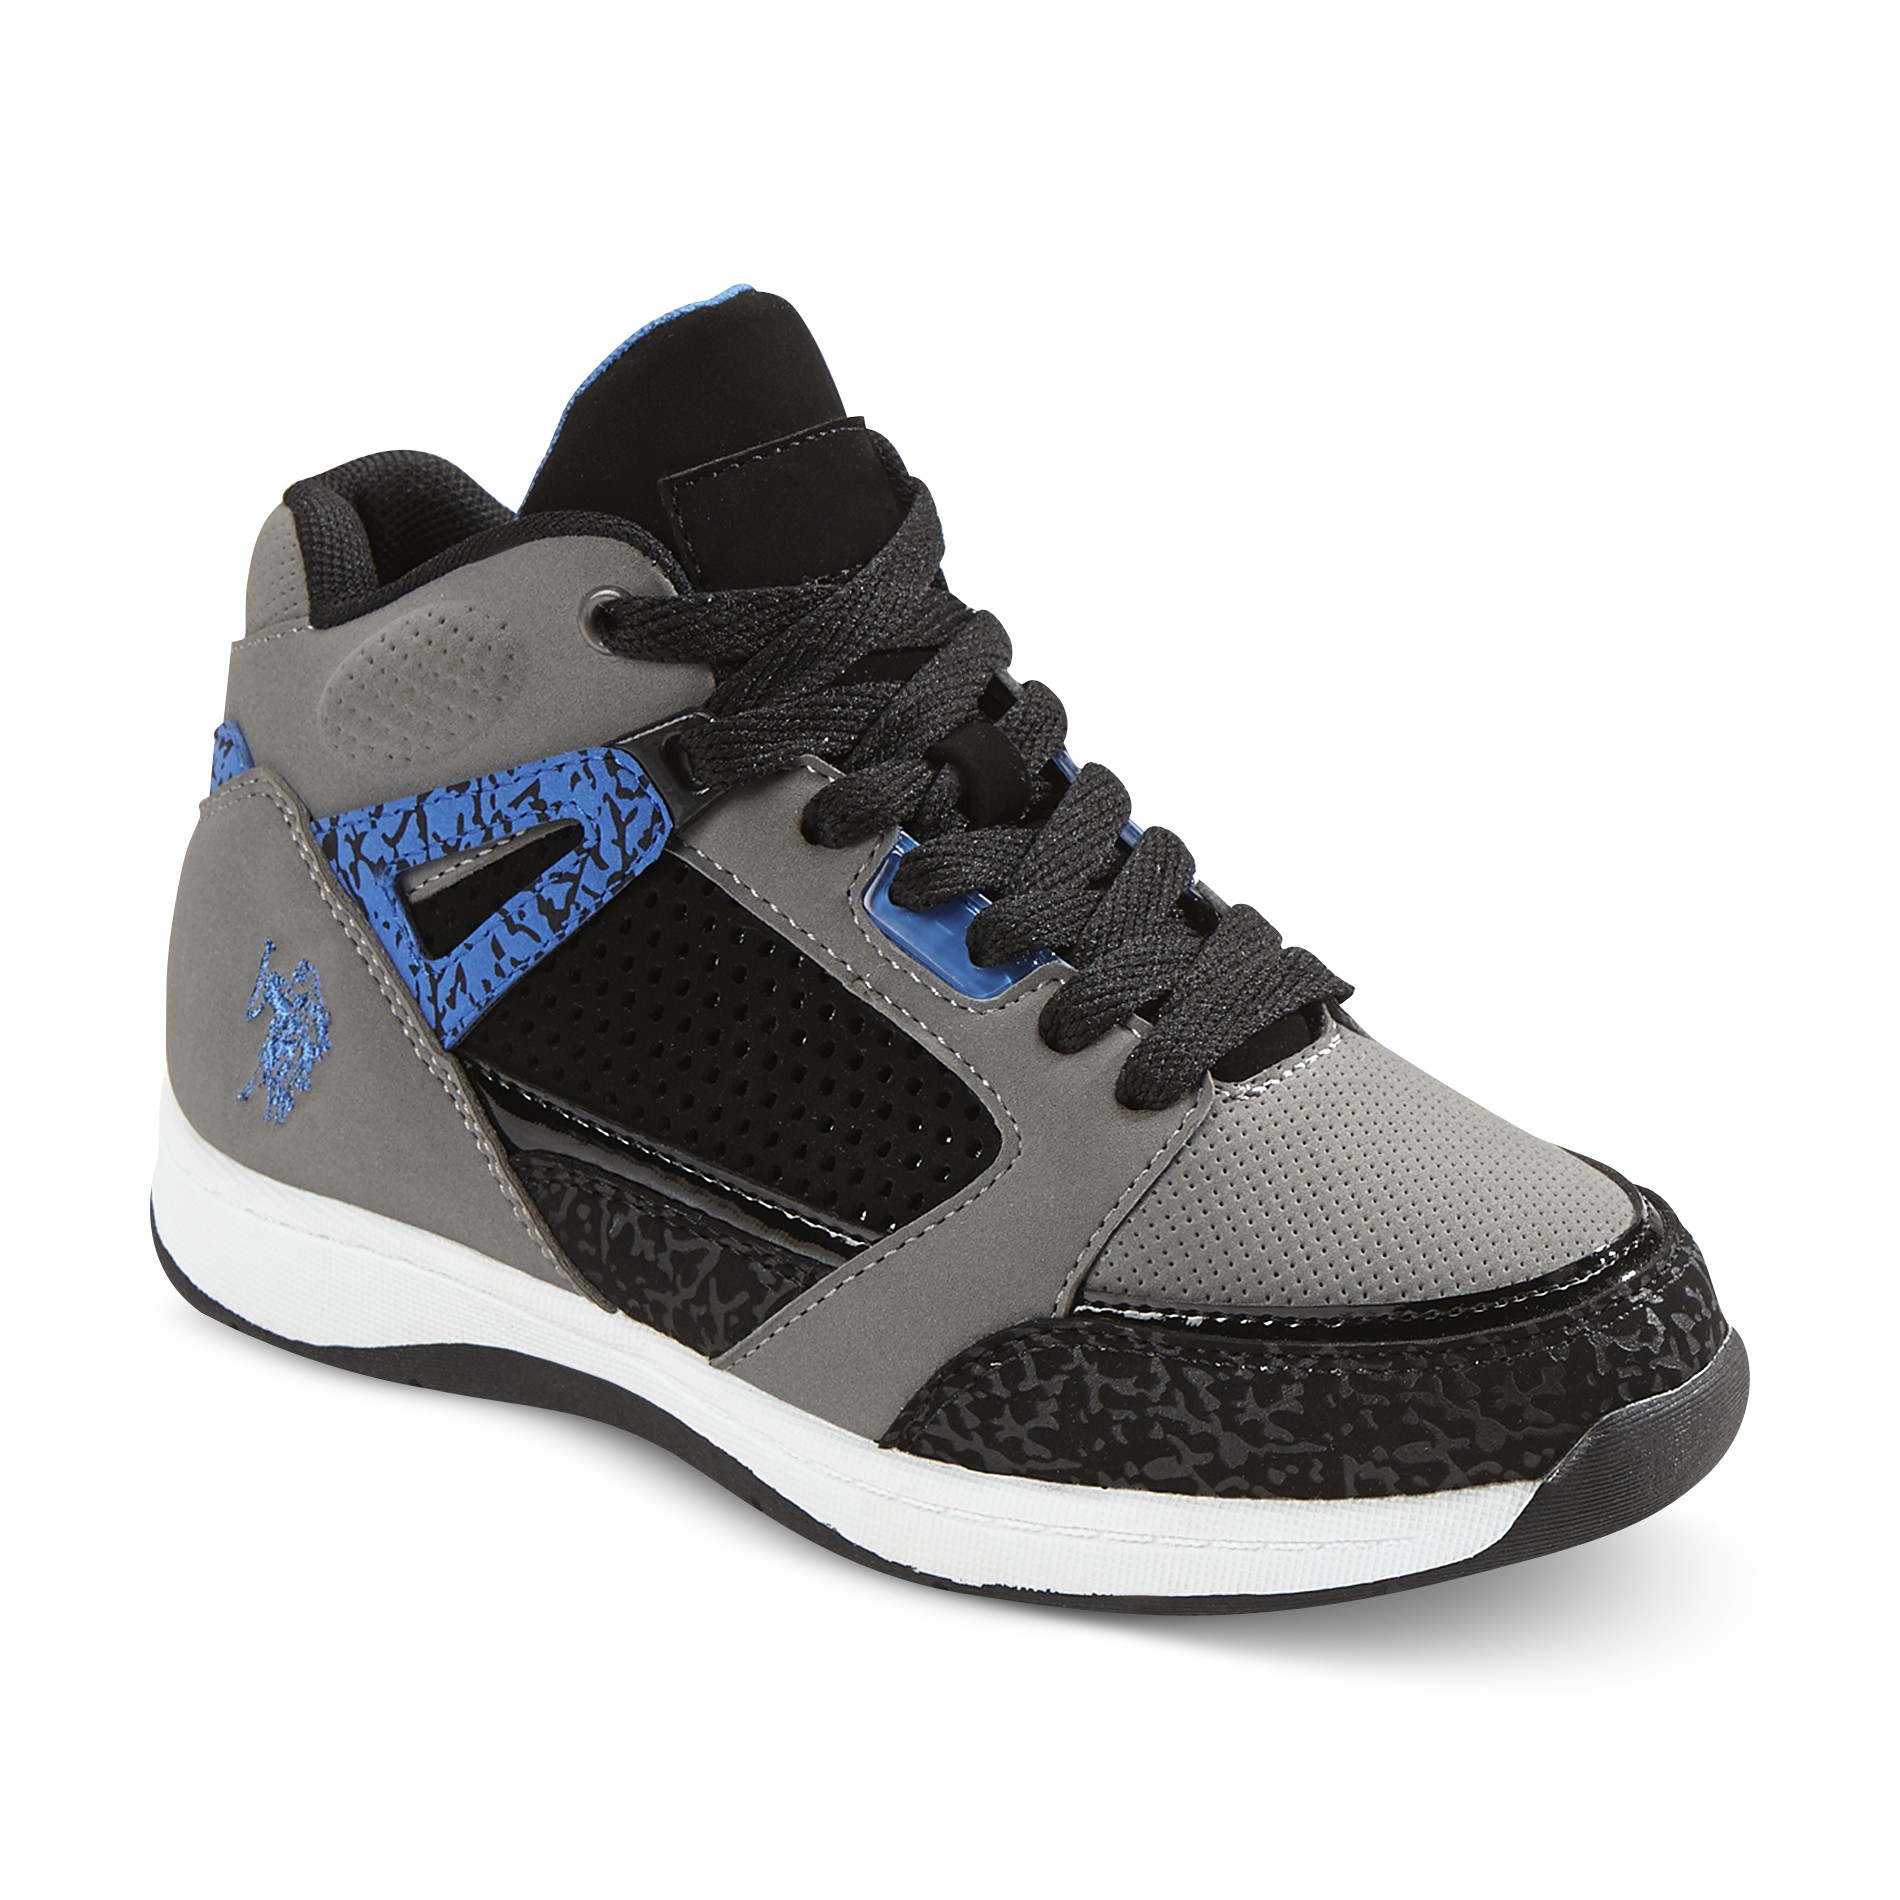 U.S. Polo Assn. Boy's Reed High-Top Athletic Sneaker - Gray/Blue/Black